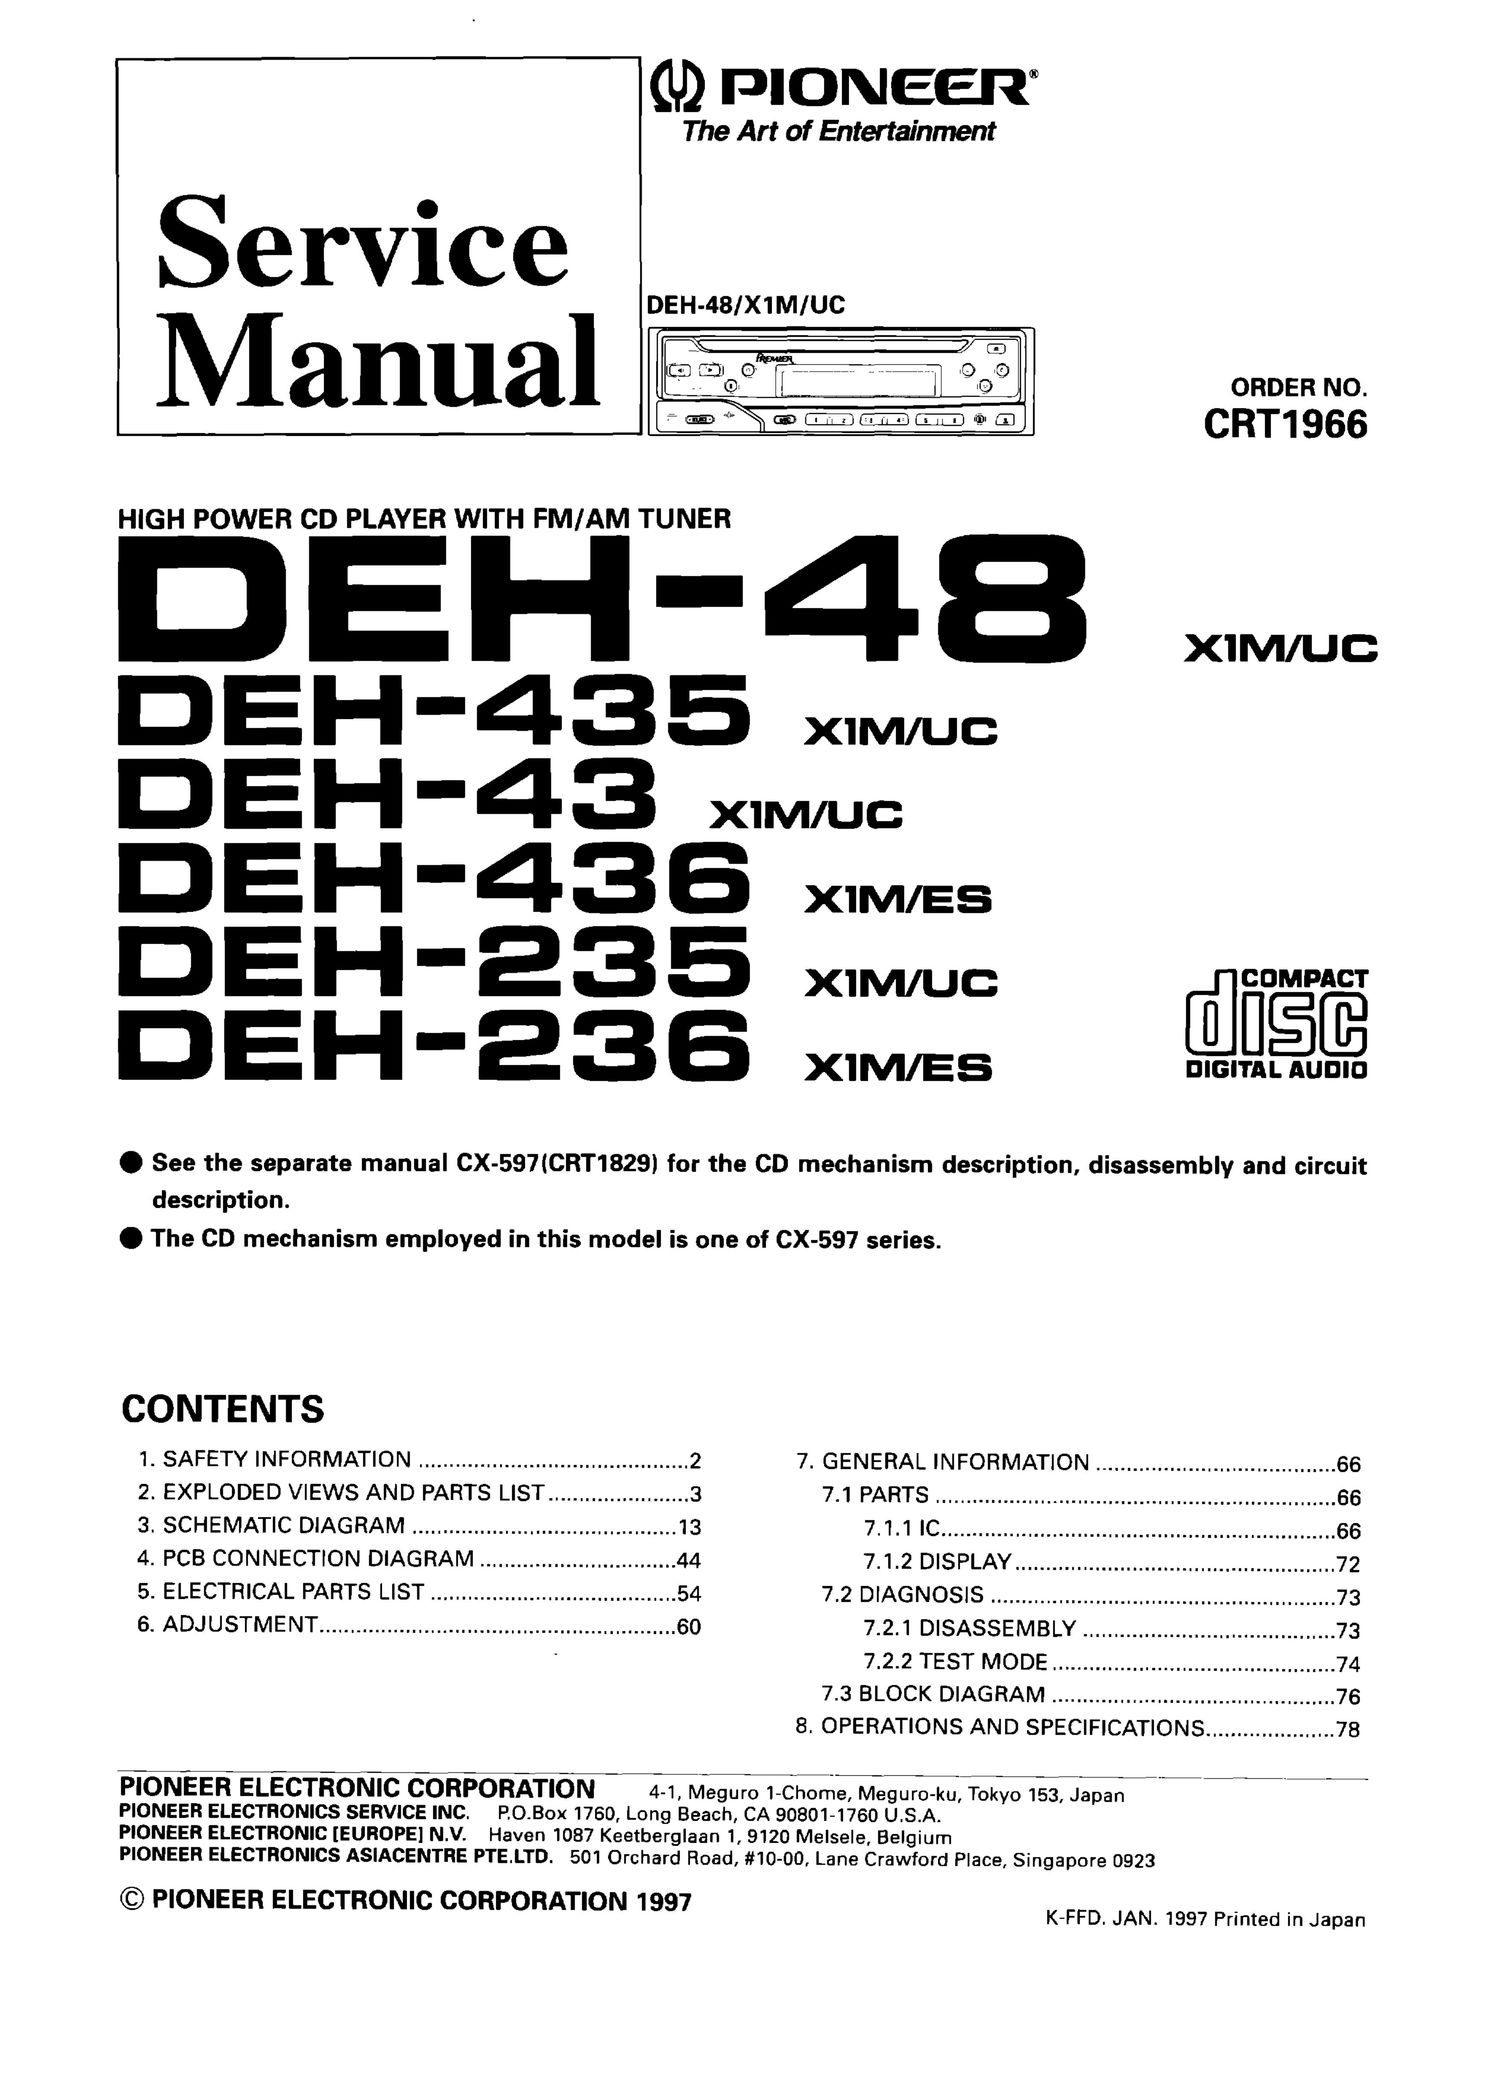 pioneer deh 436 service manual